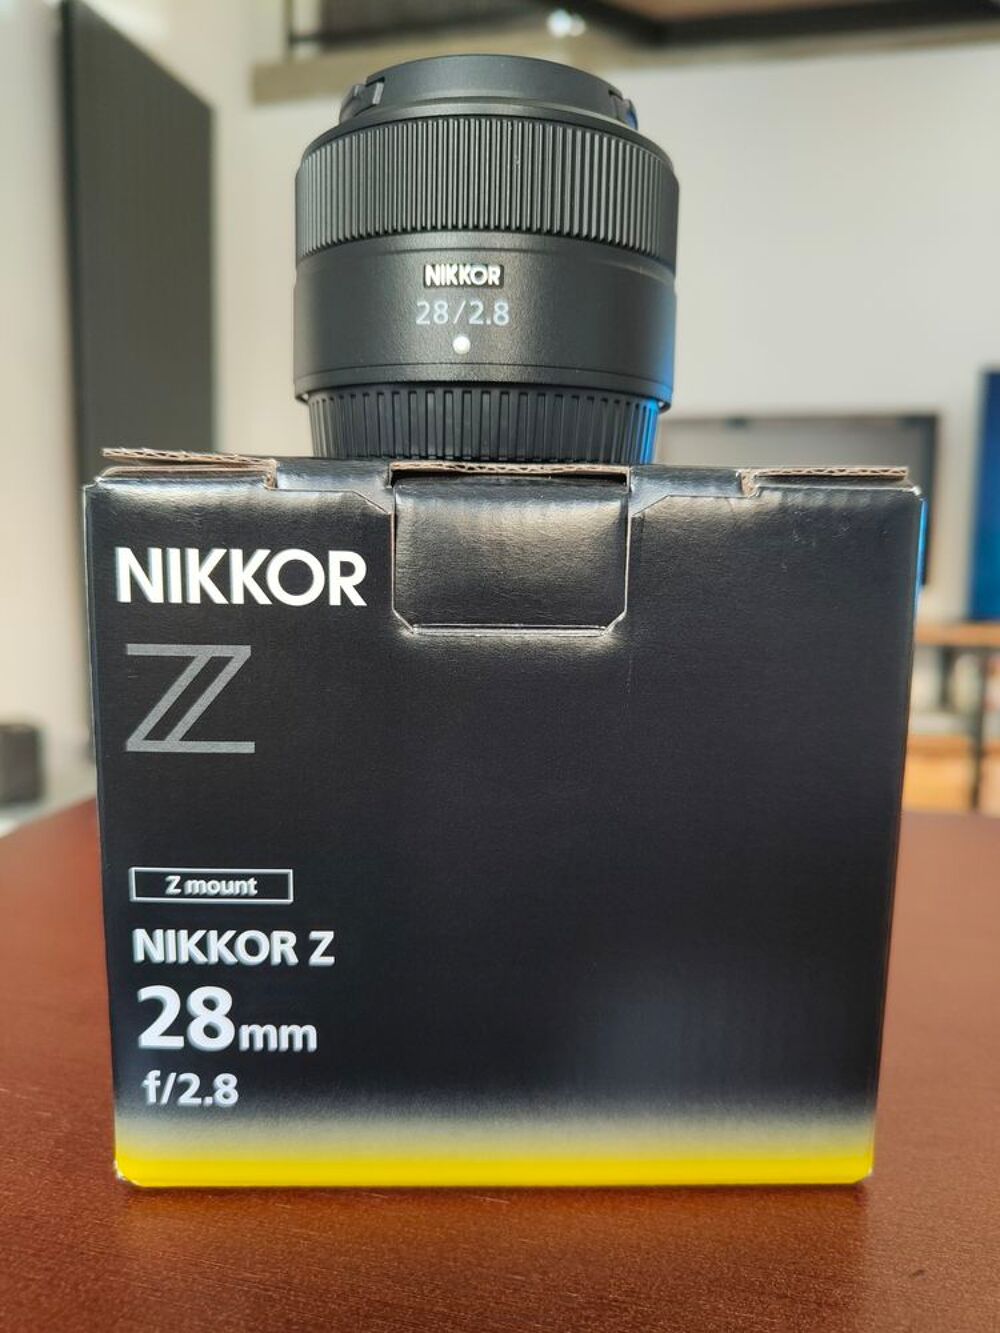 Nikon Z 28 mm f/2.8 Photos/Video/TV